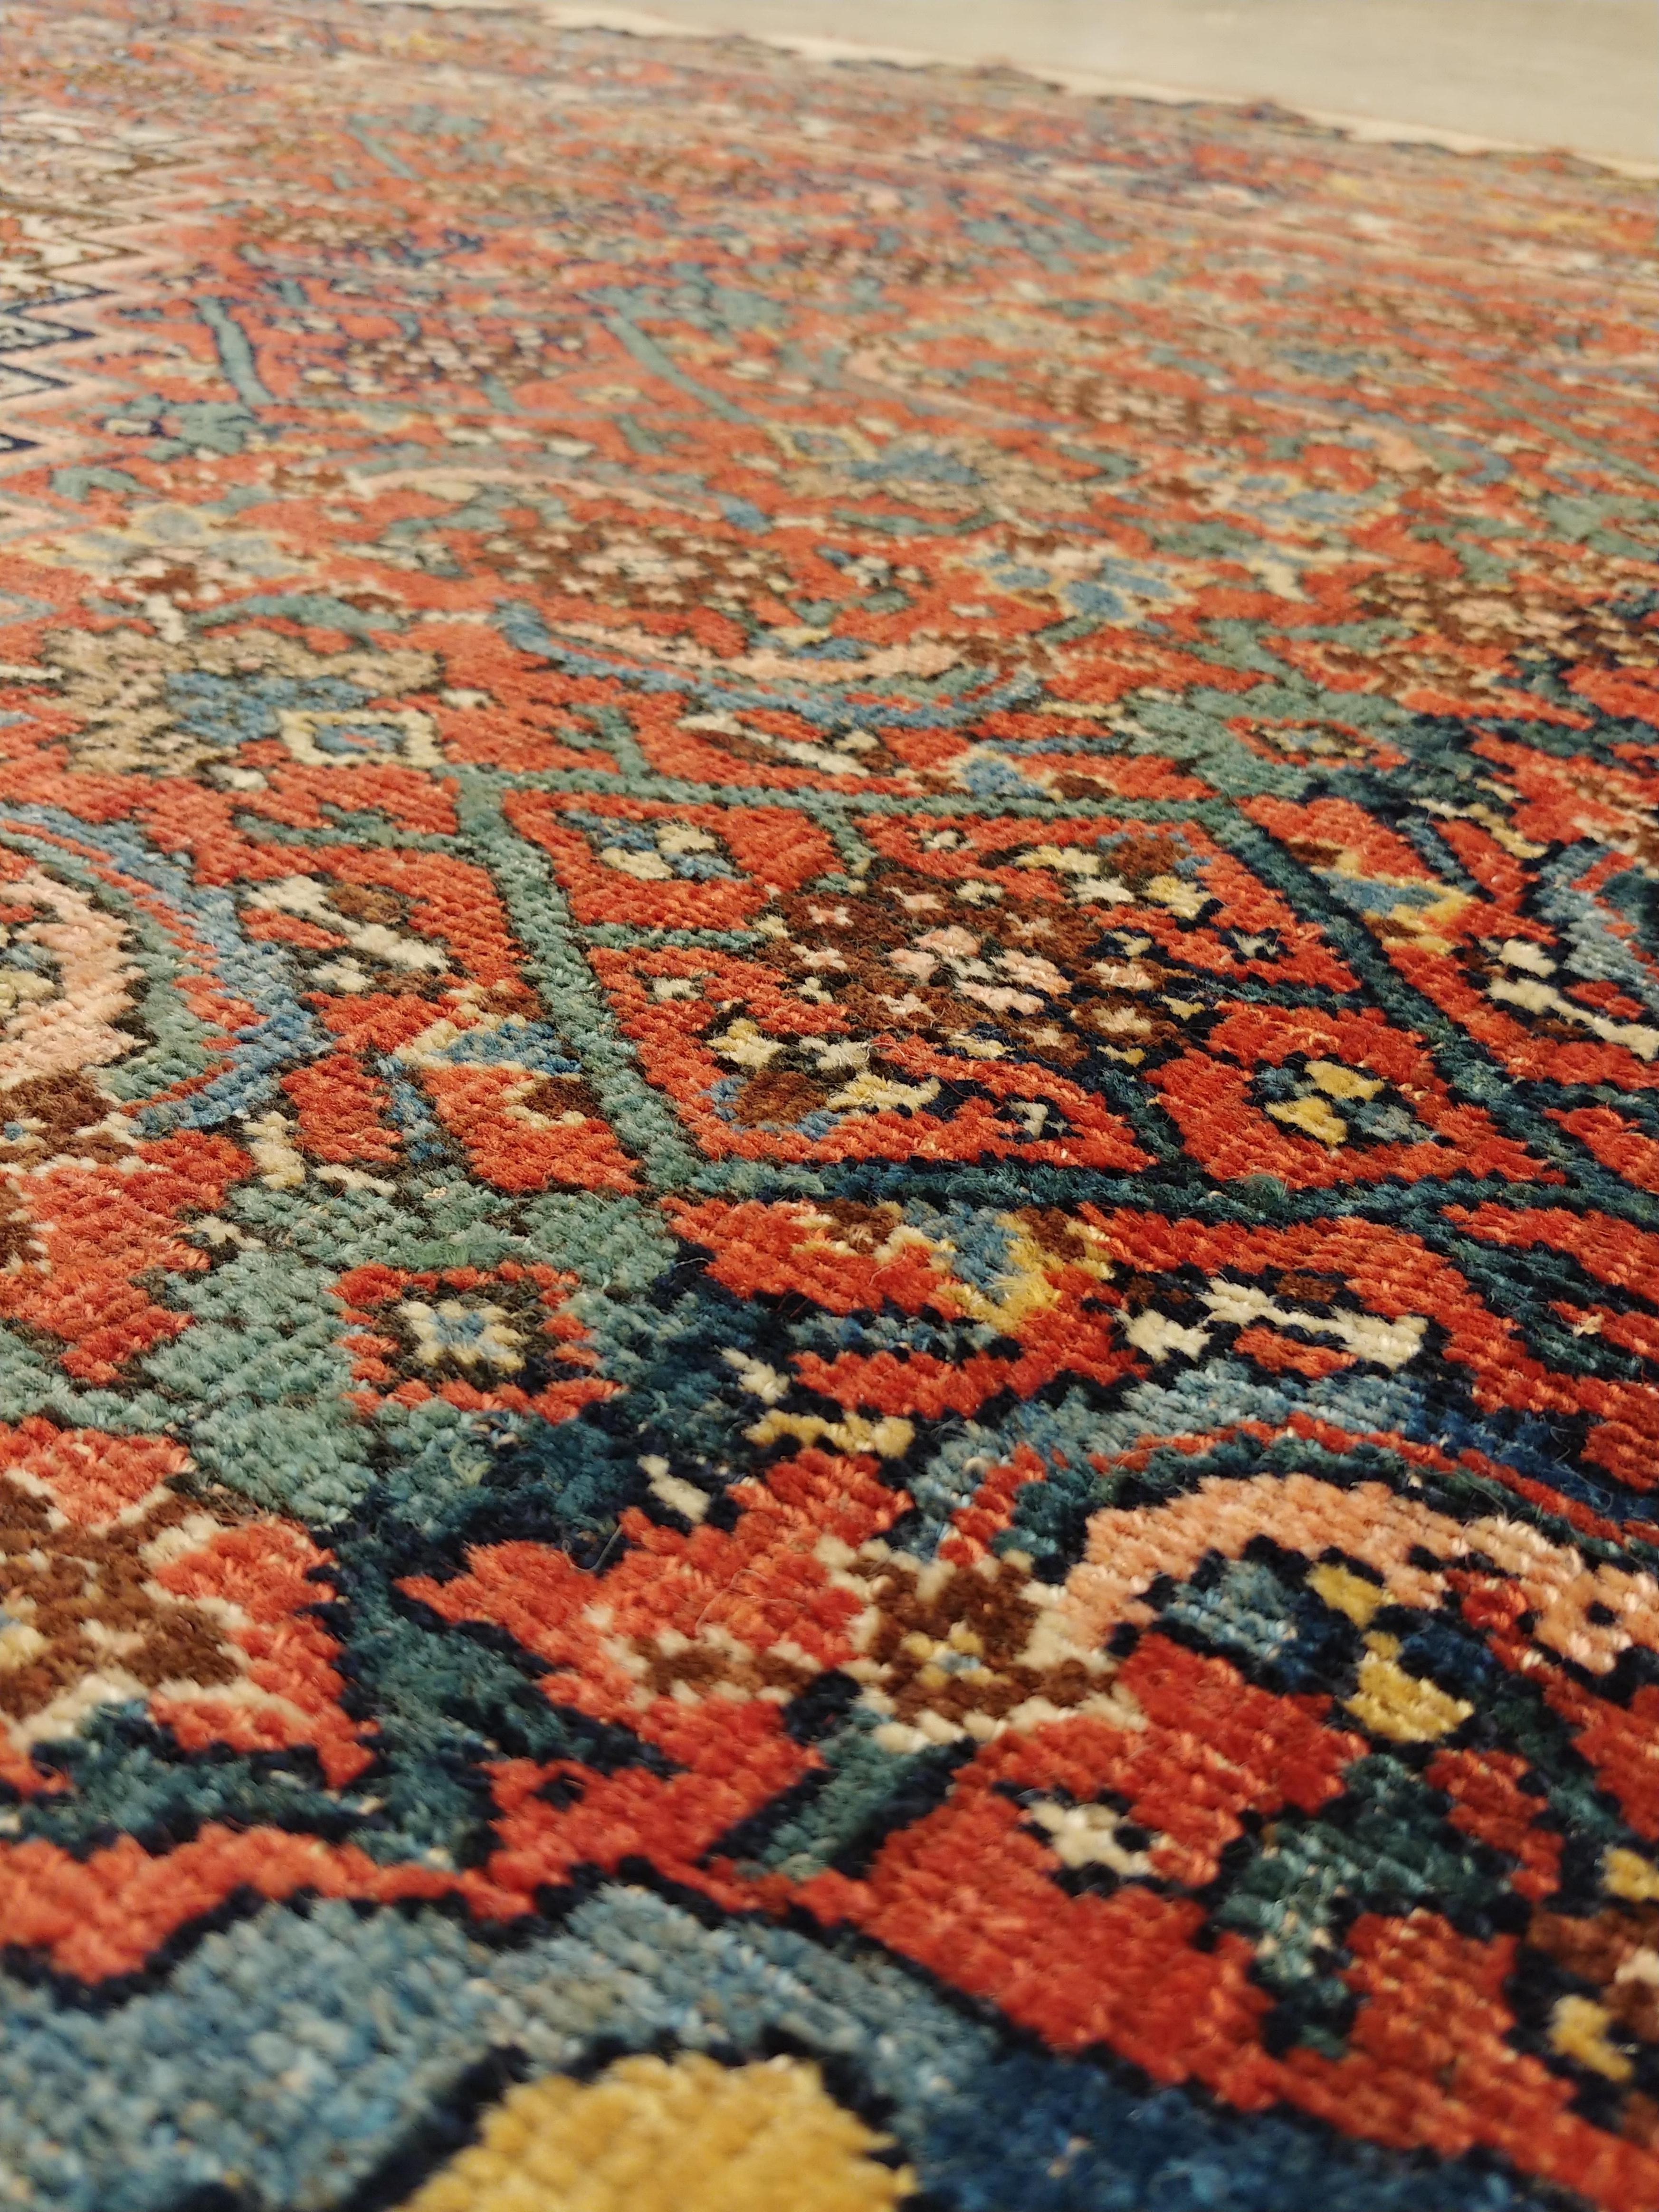 Antique Bijar Carpet Oriental Rug, Handmade, Ivory, Rust, Light Blue, Terracotta In Good Condition For Sale In Port Washington, NY